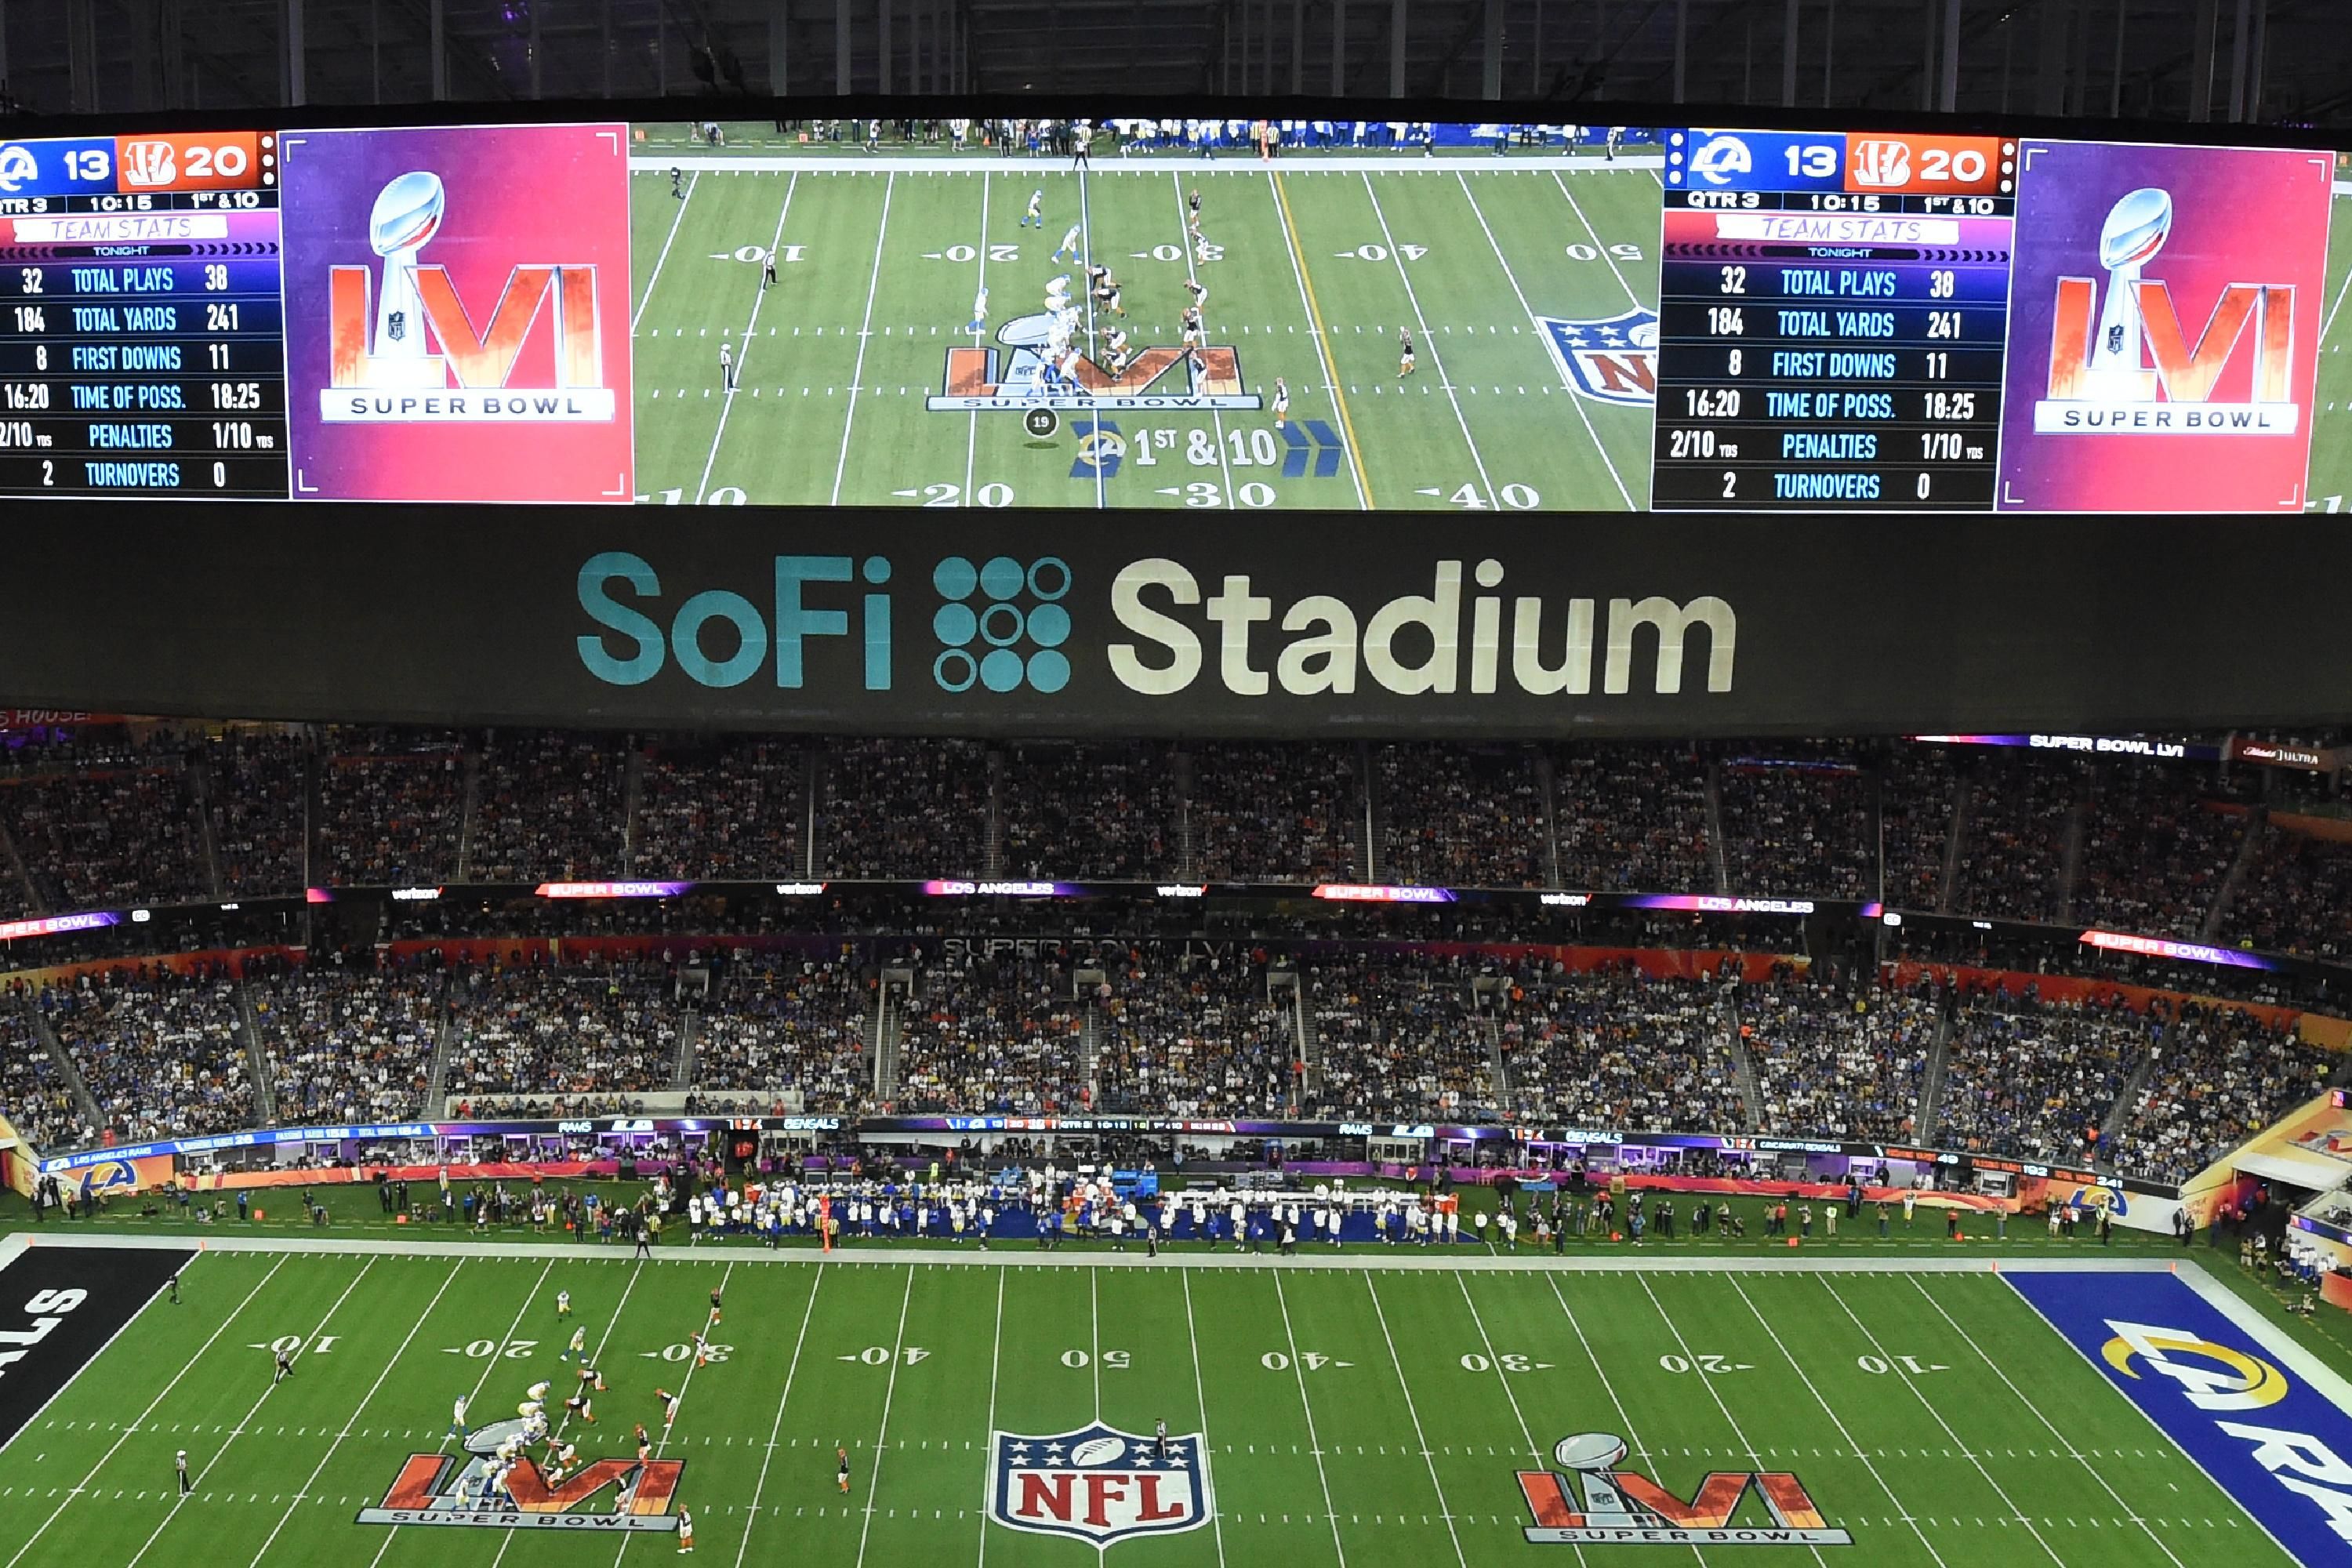 SoFi Stadium is pictured during the Super Bowl